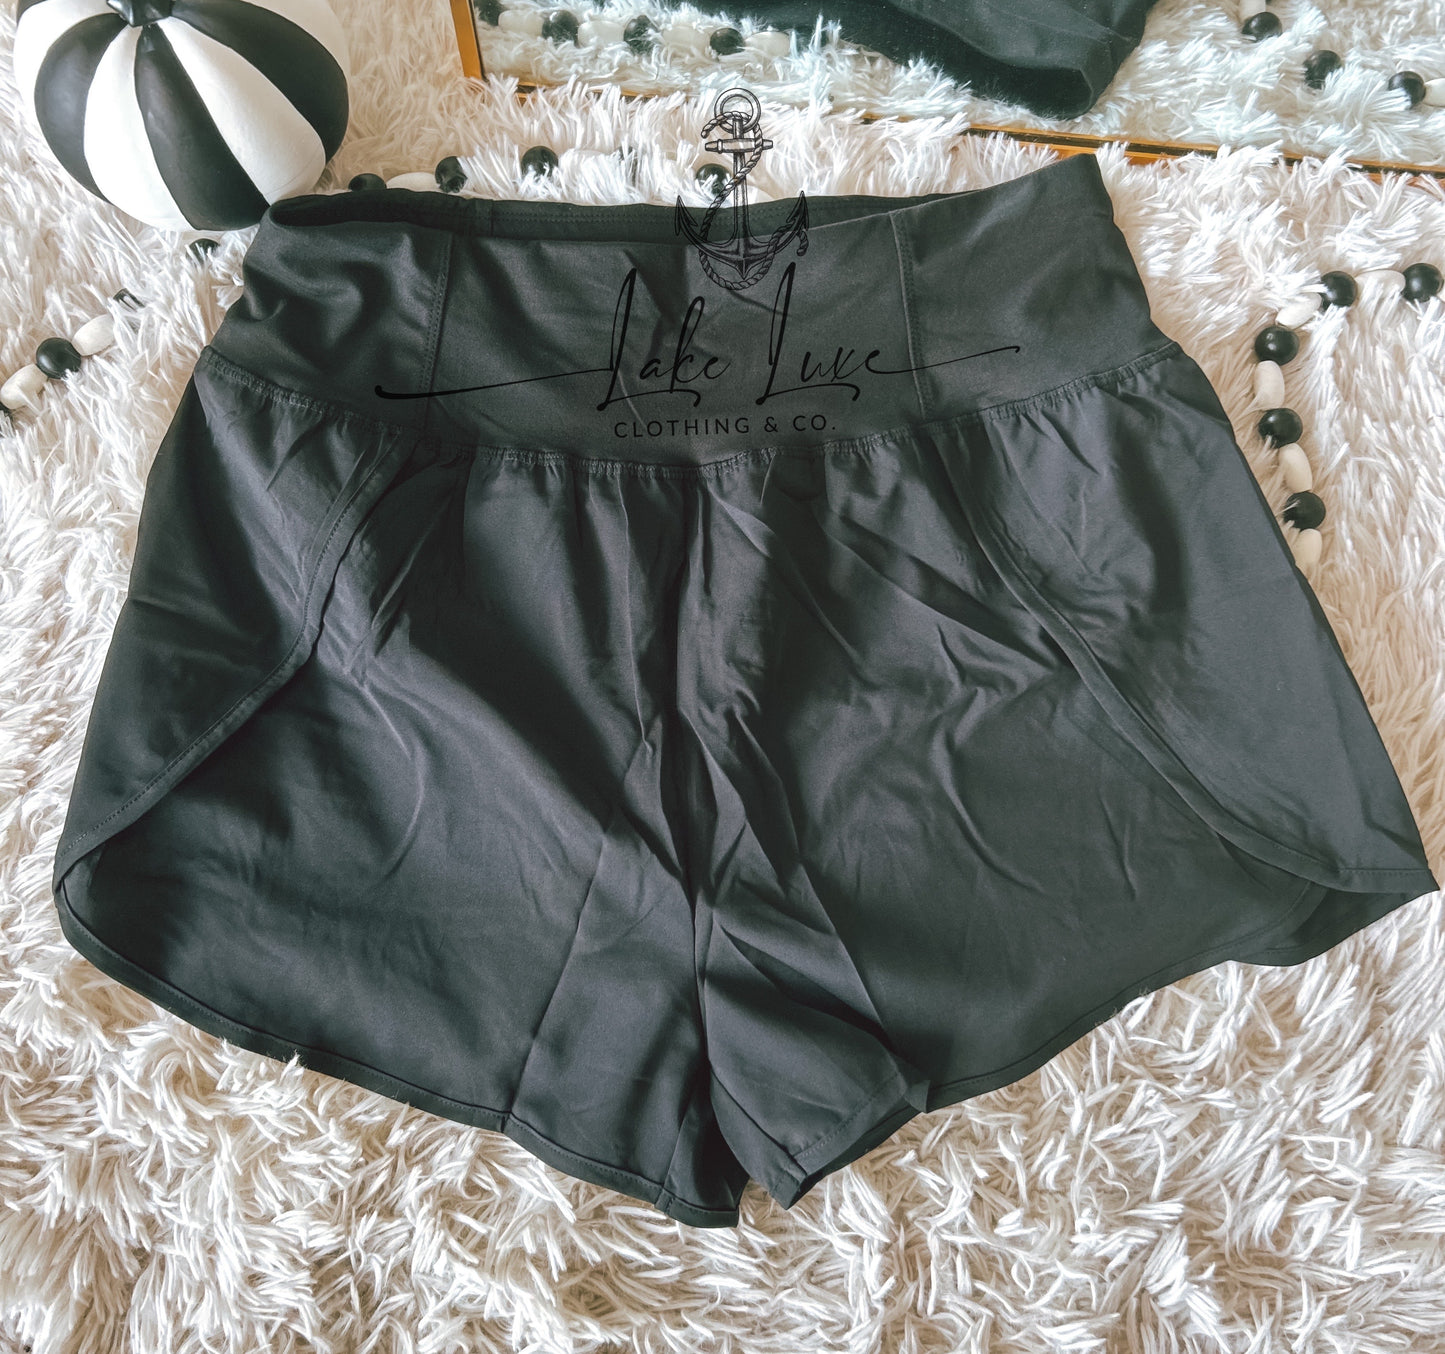 Black athletic shorts 1x-3x